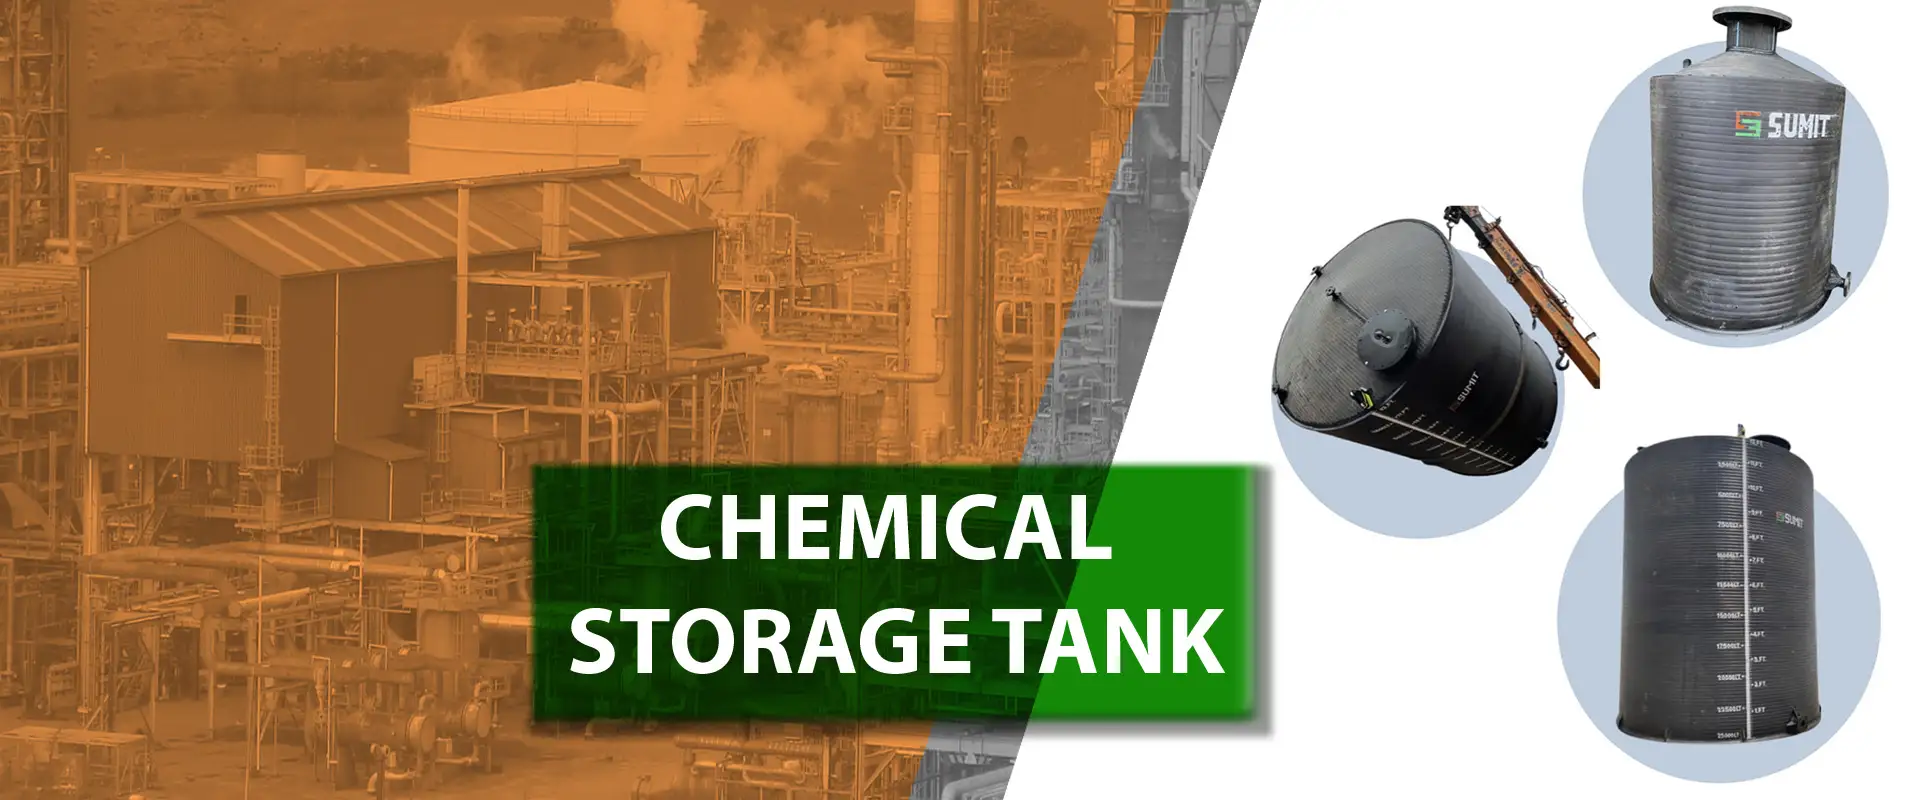 Chemical Storage Tanks in Ahmedabad, केमिकल स्टोरेज टैंक